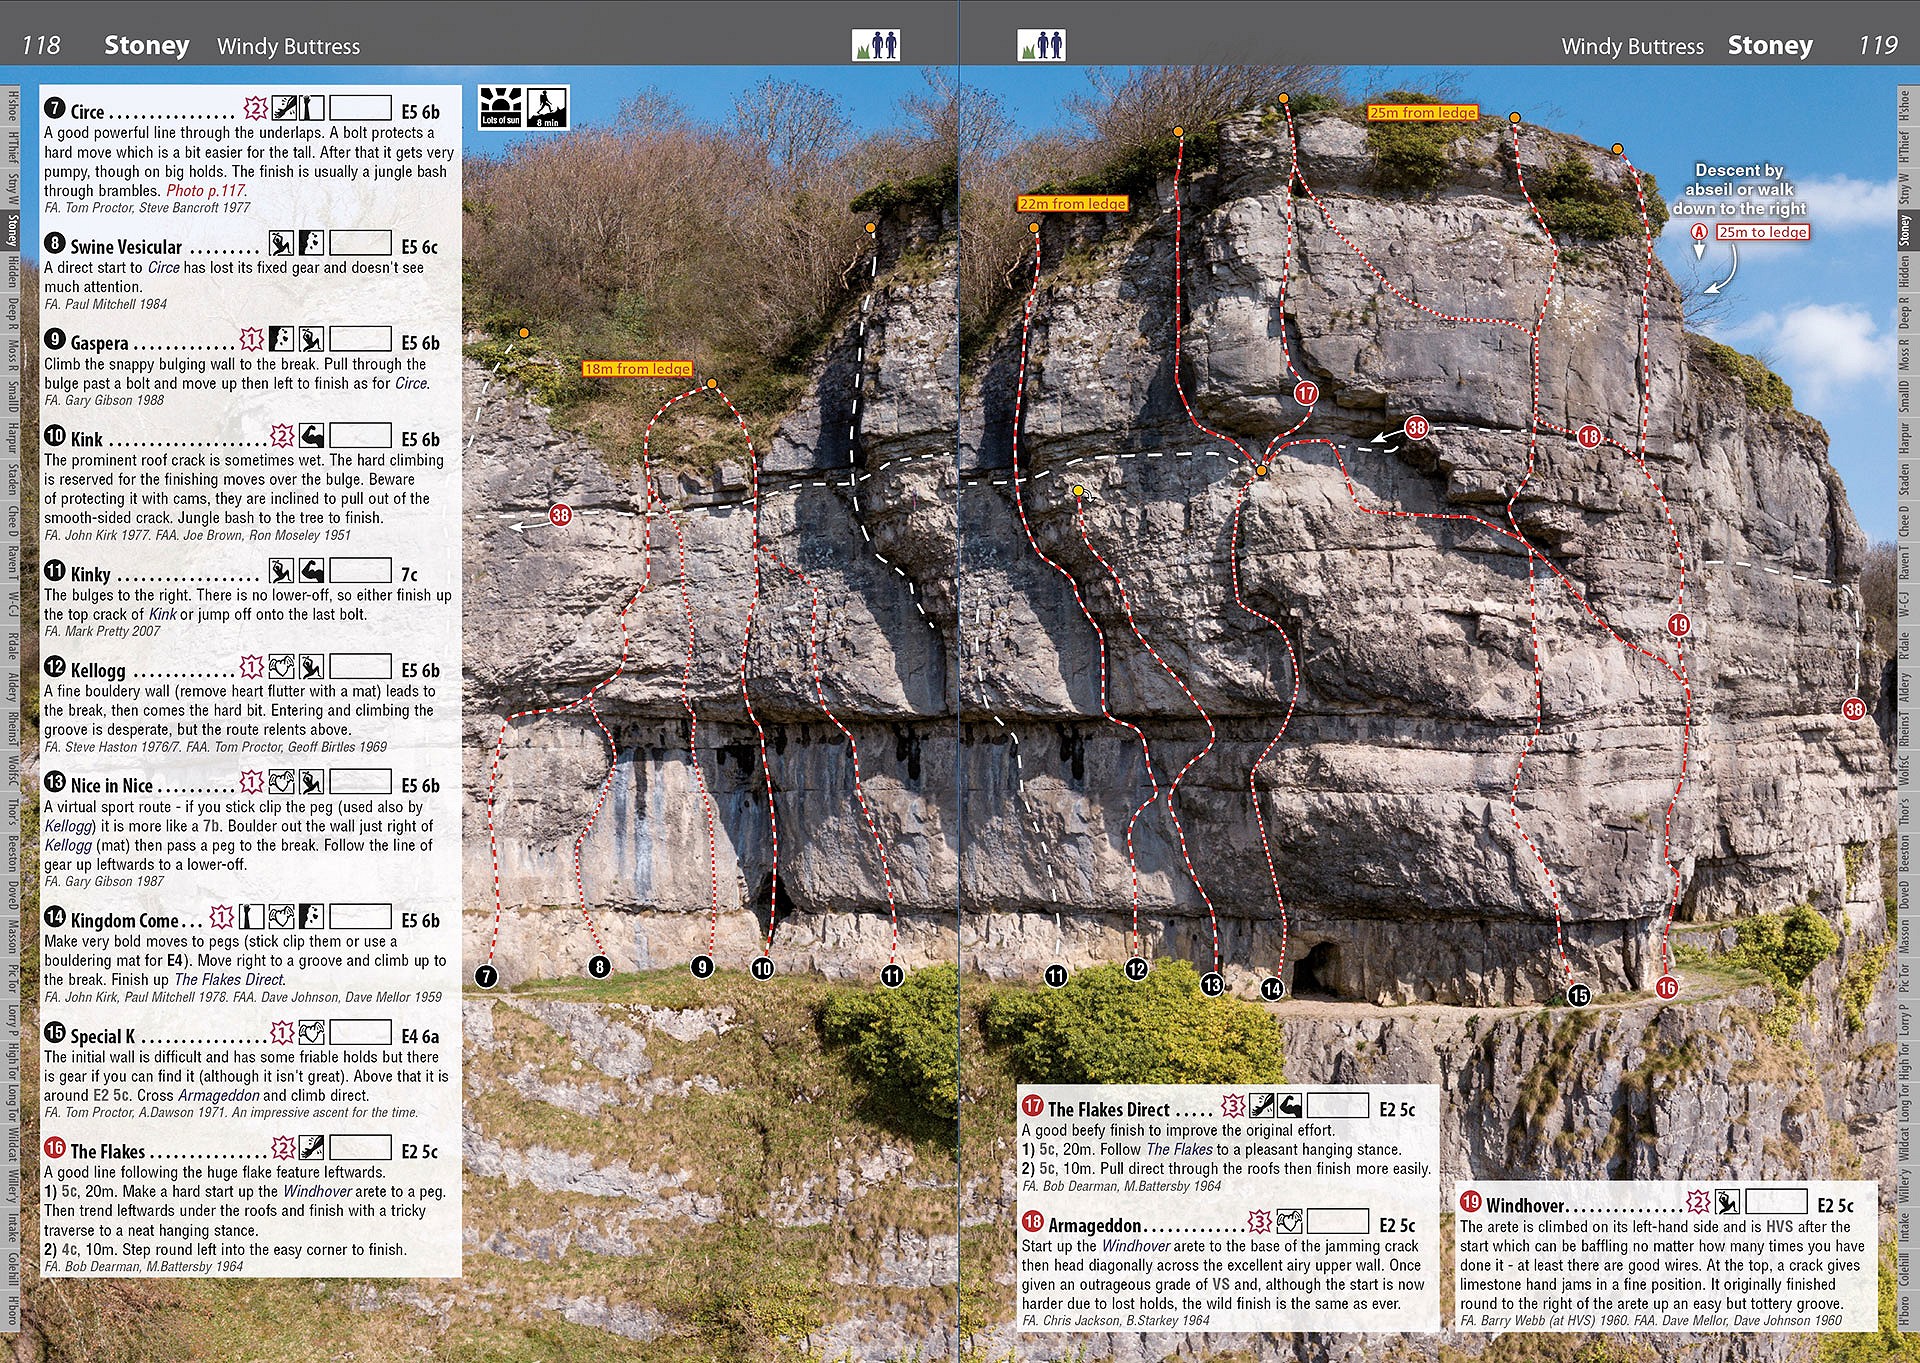 Peak Limestone Rockfax example page - Windy Buttress at Stoney  © Rockfax